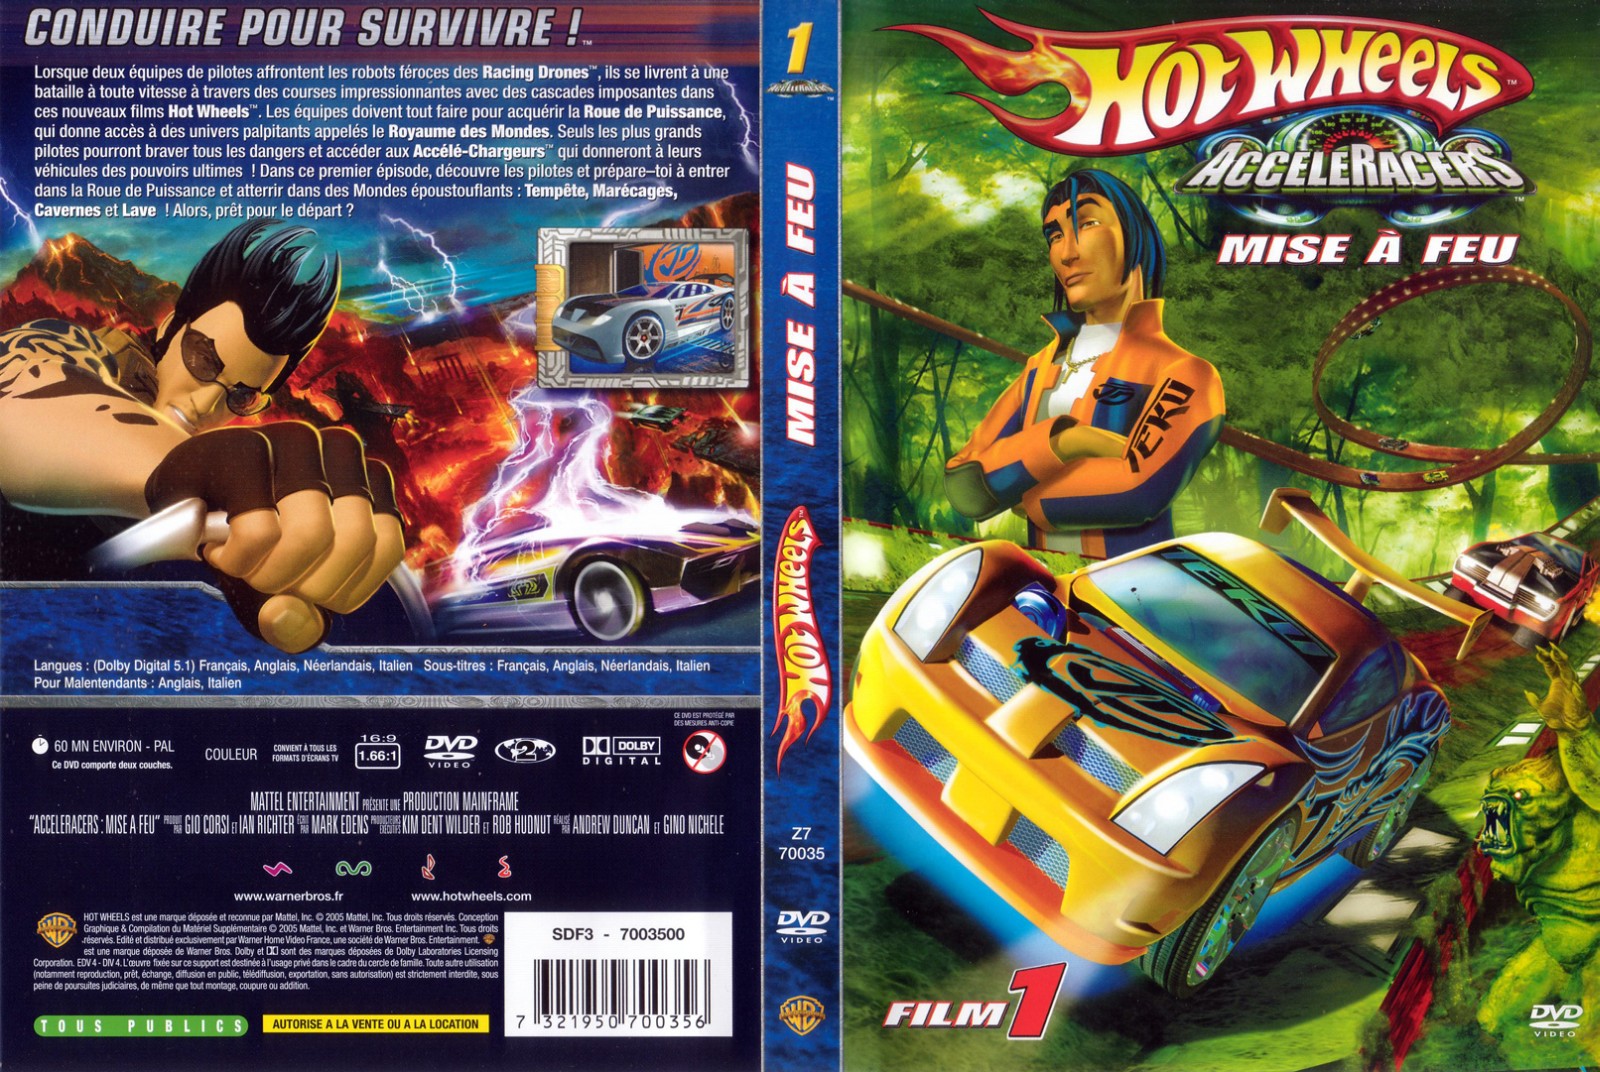 Jaquette DVD Hot wheels mise a feu